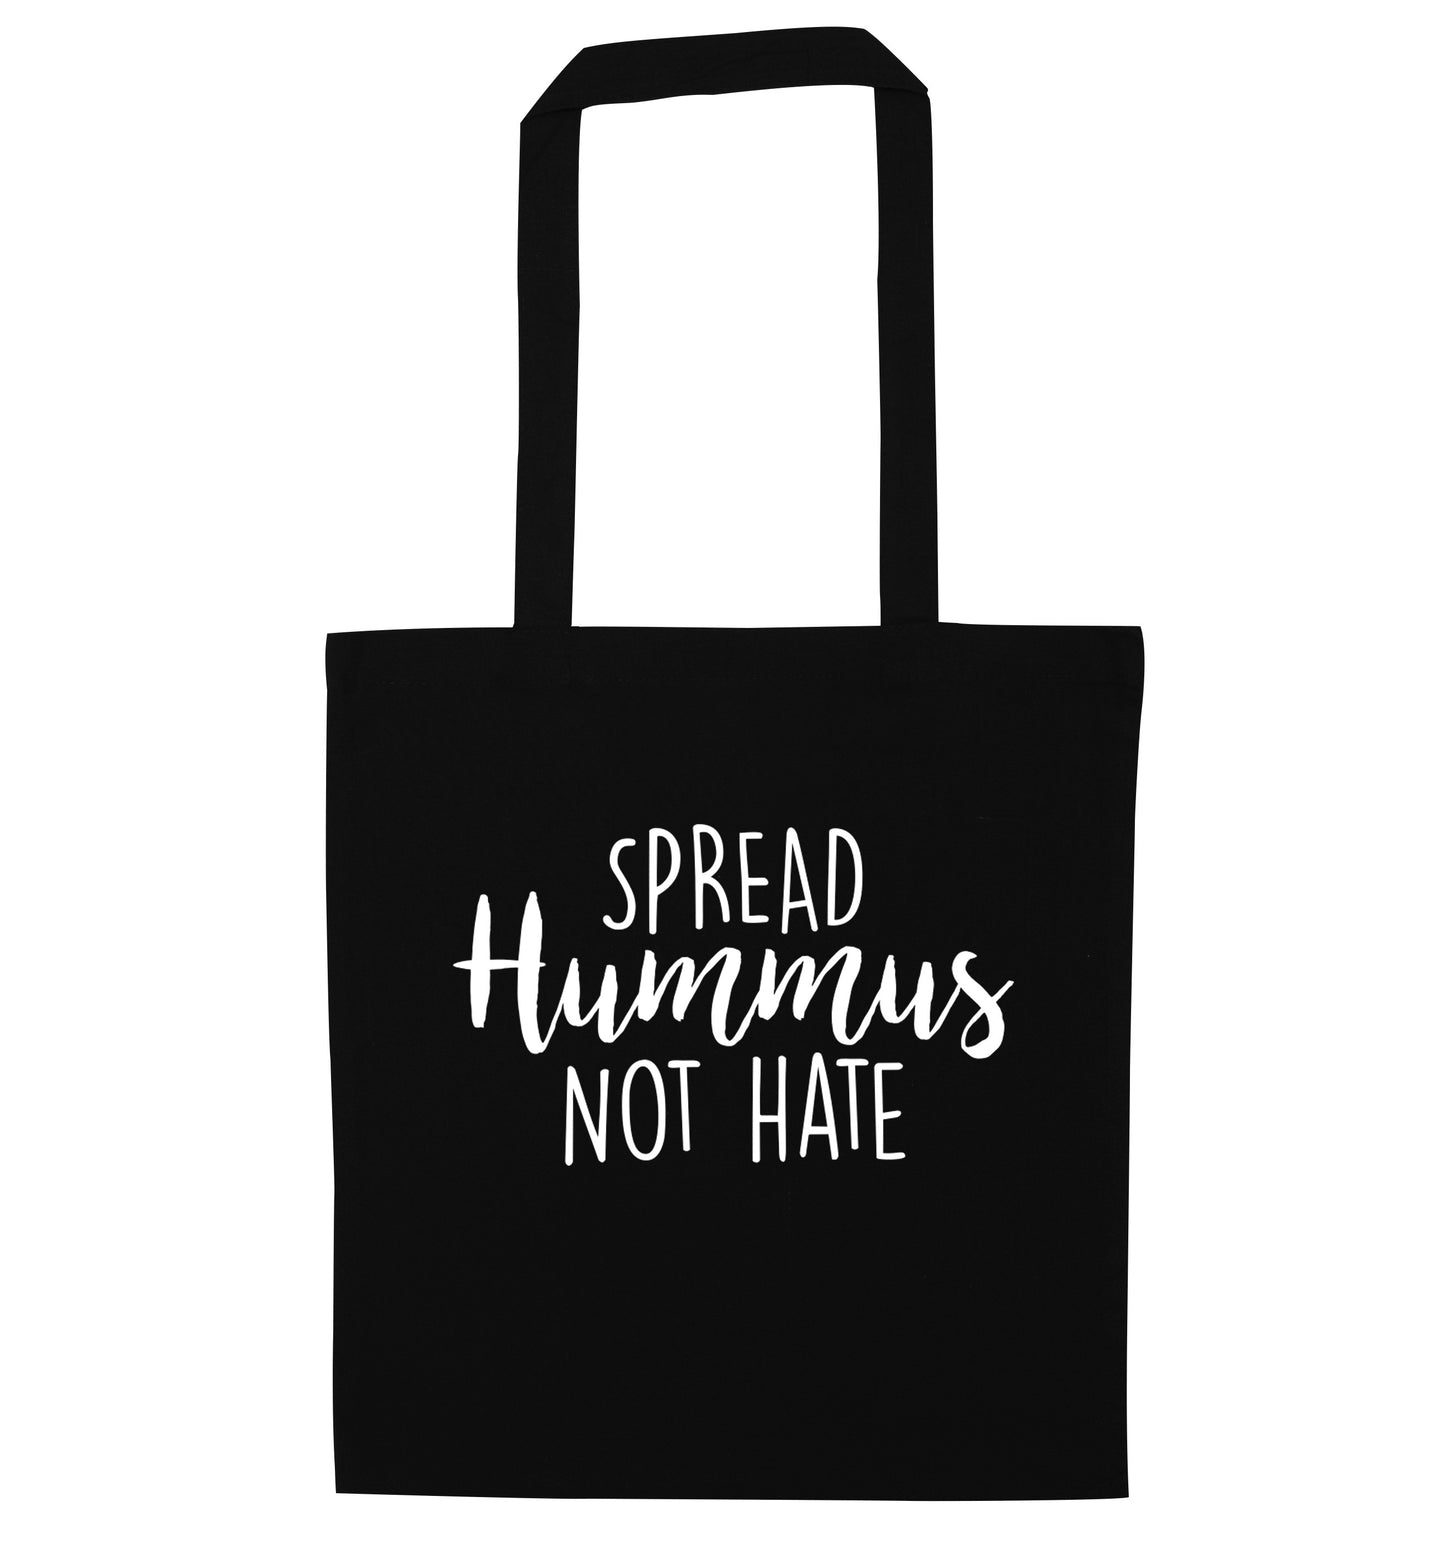 Spread hummus not hate script text black tote bag